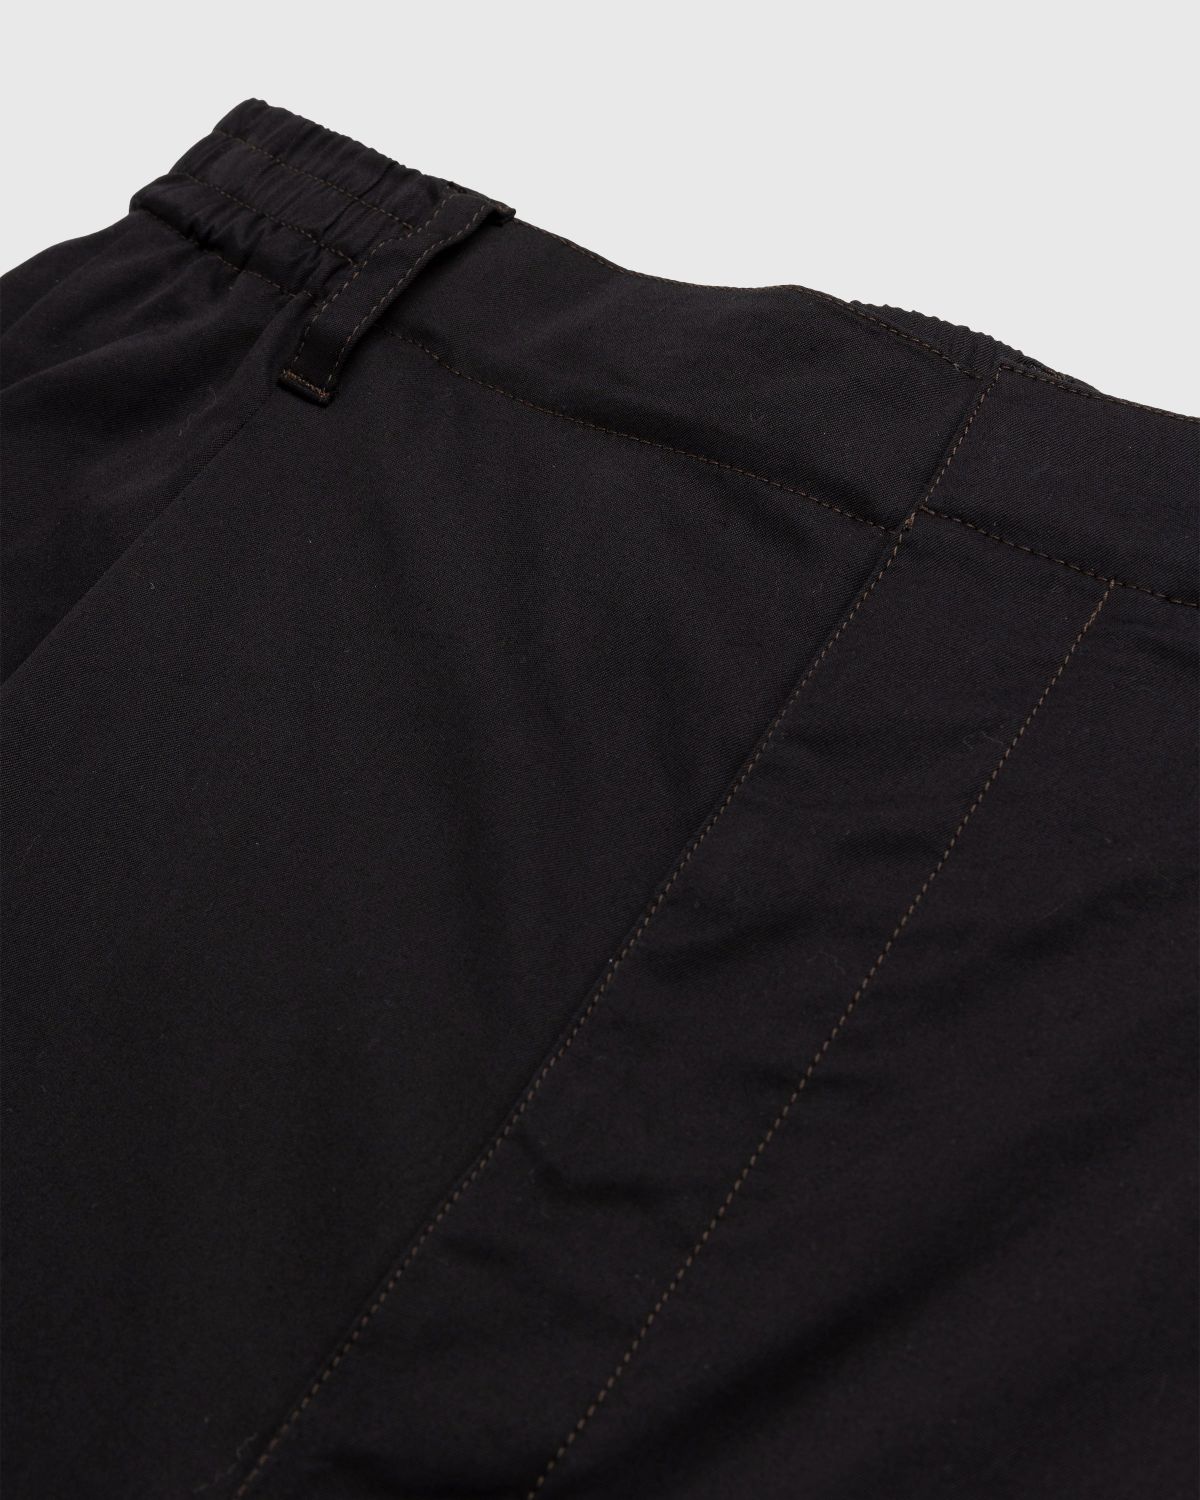 Lemaire – Easy Pleated Pants Black - Pants - Black - Image 4